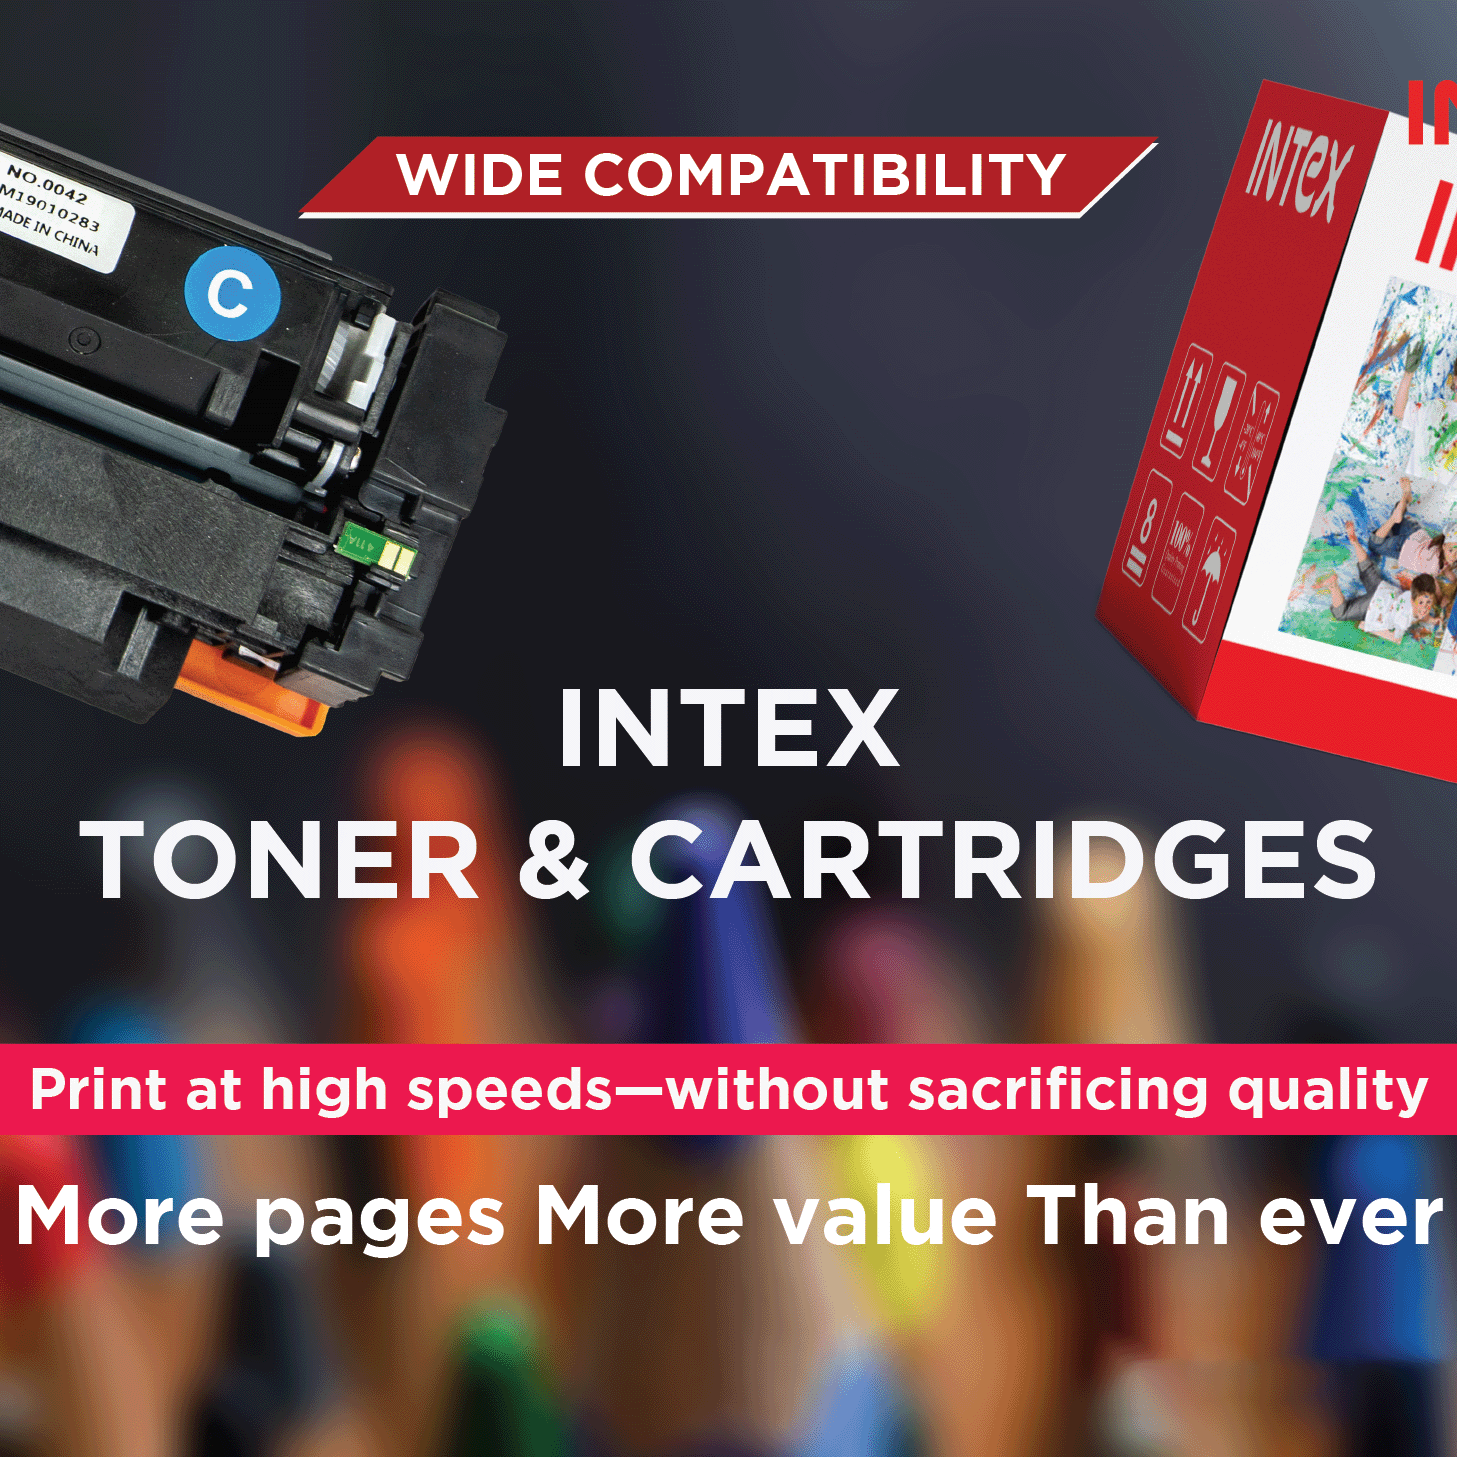 Intex Products Catalogue_Toners-48